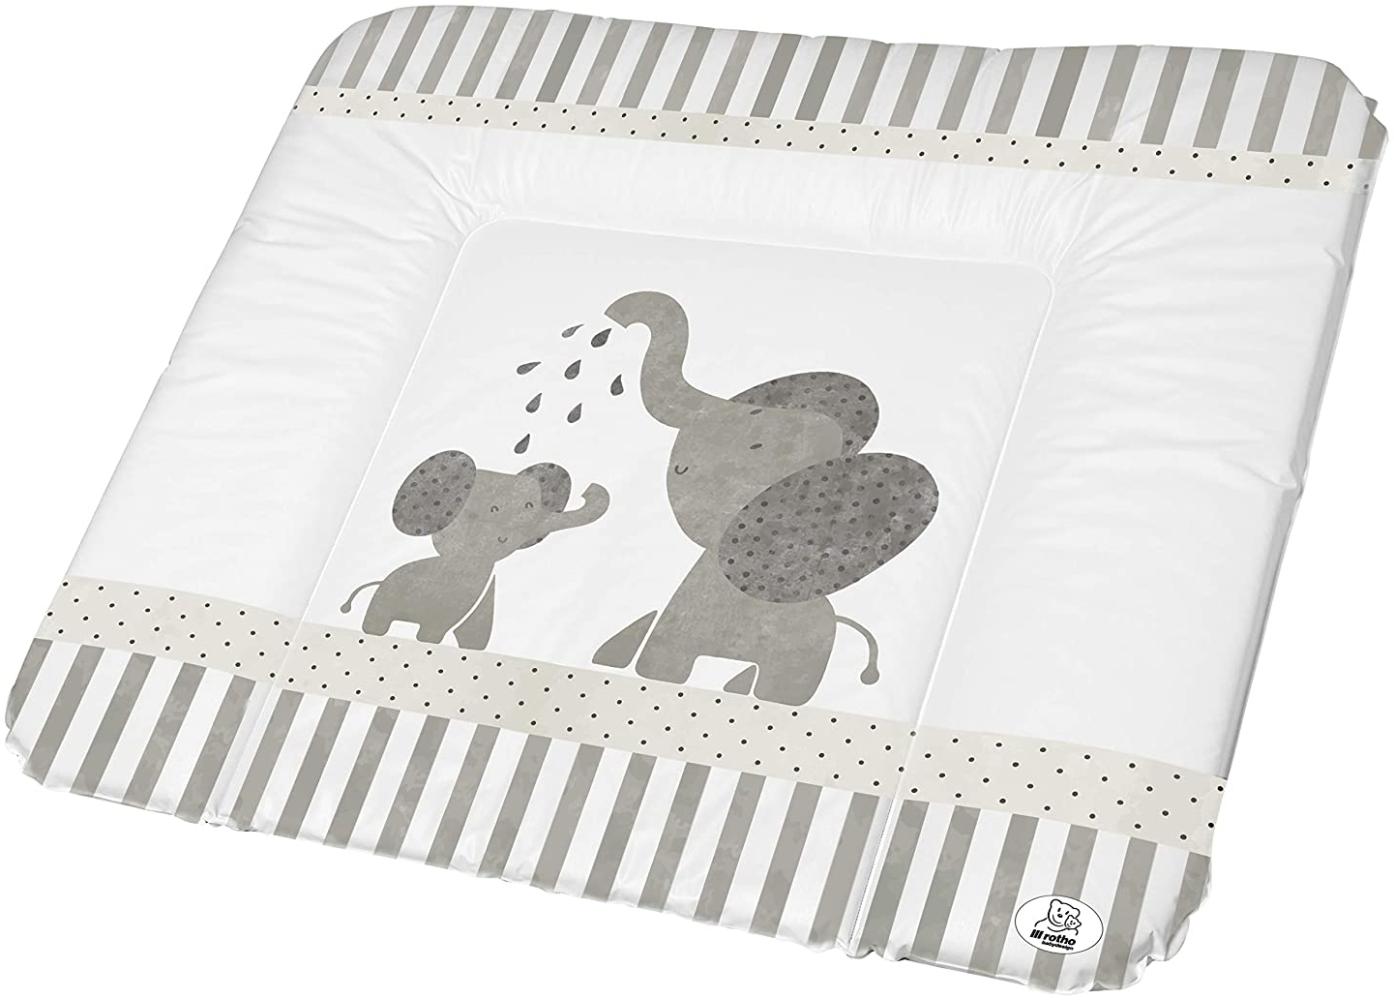 Rotho Babydesign - Wickelauflage Bella Bambina, Modern Elephants, weiß/grau, 72 x 85 cm Bild 1